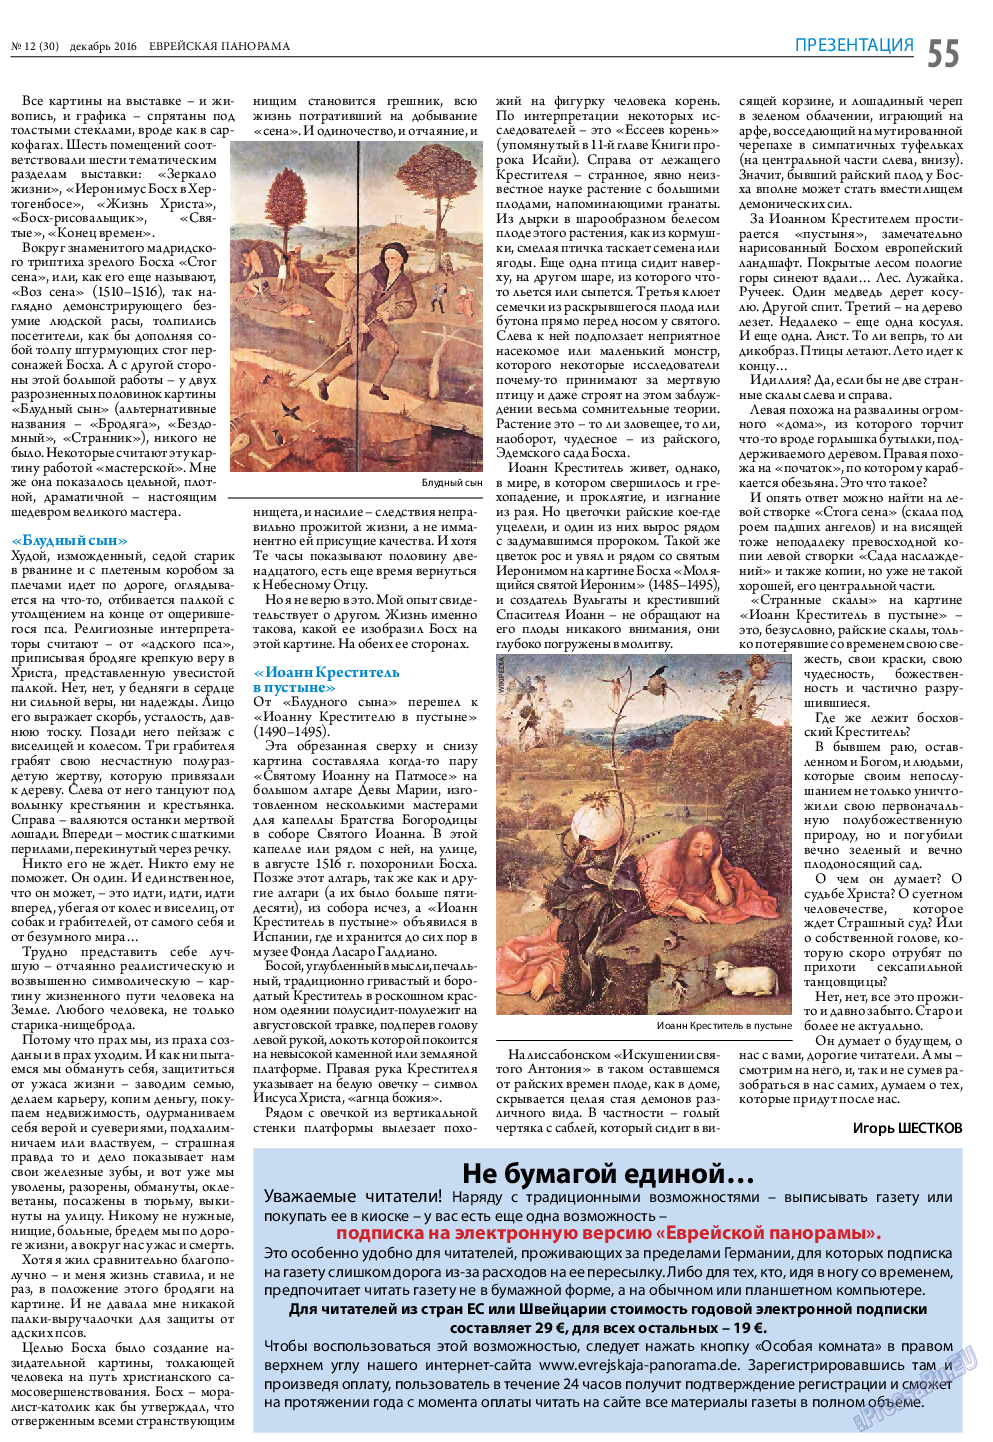 Еврейская панорама, газета. 2016 №12 стр.55